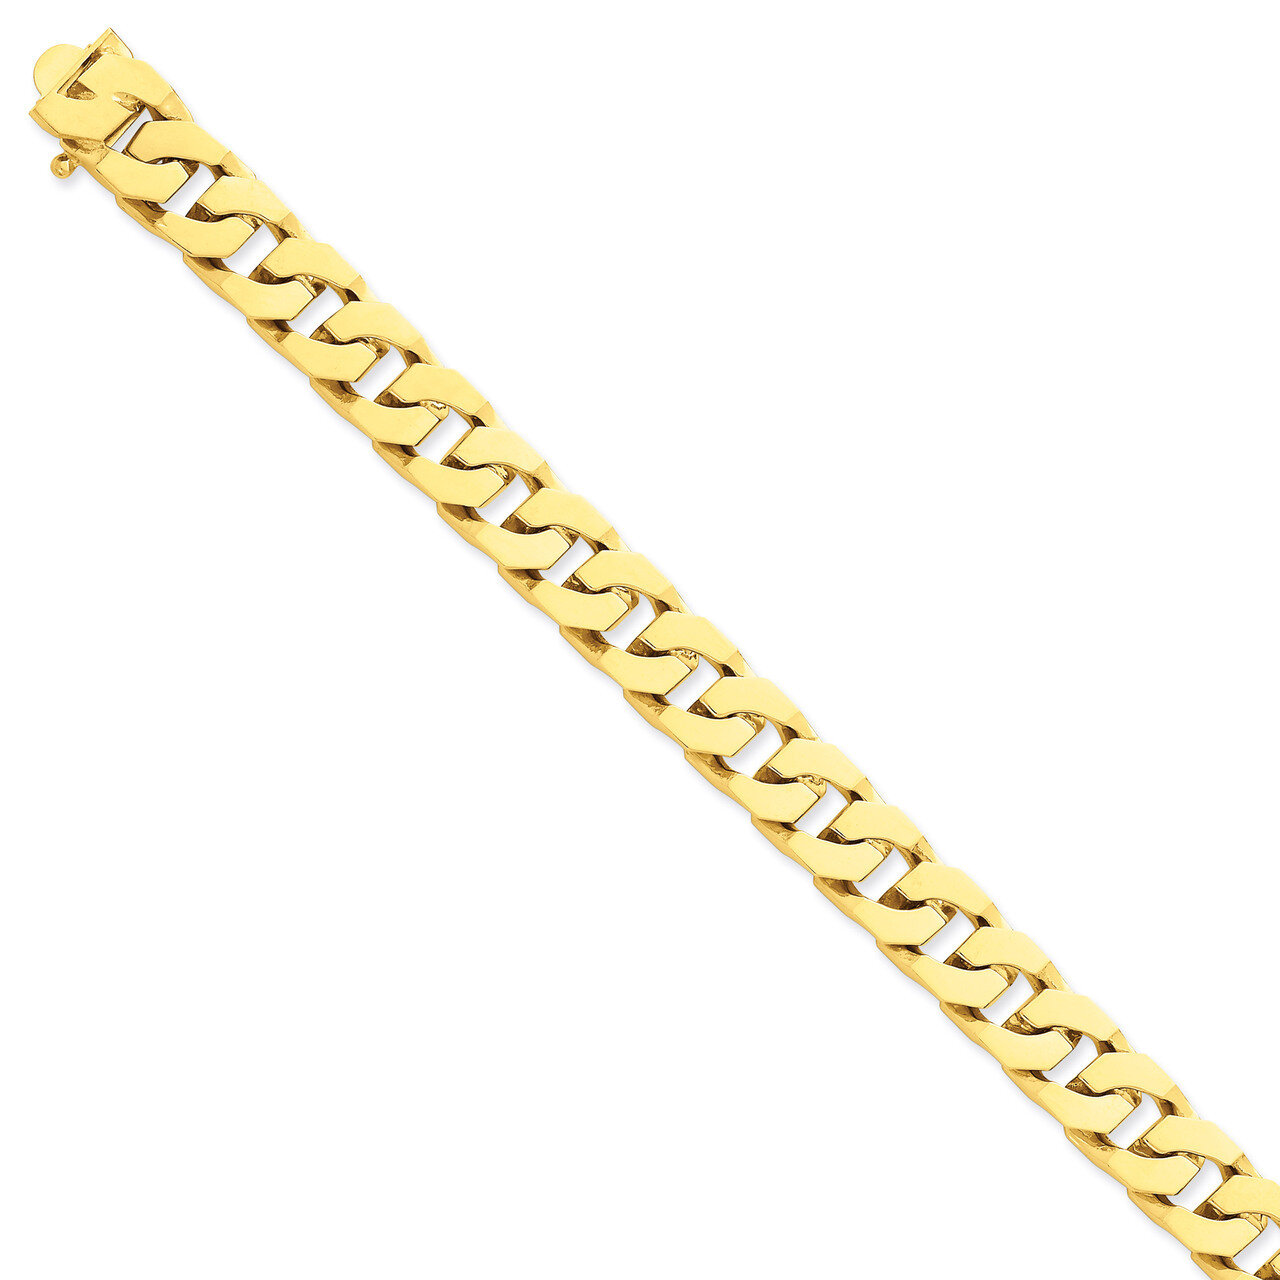 12mm Hand-Polished Fancy Link Chain 20 Inch 14k Gold LK139-20